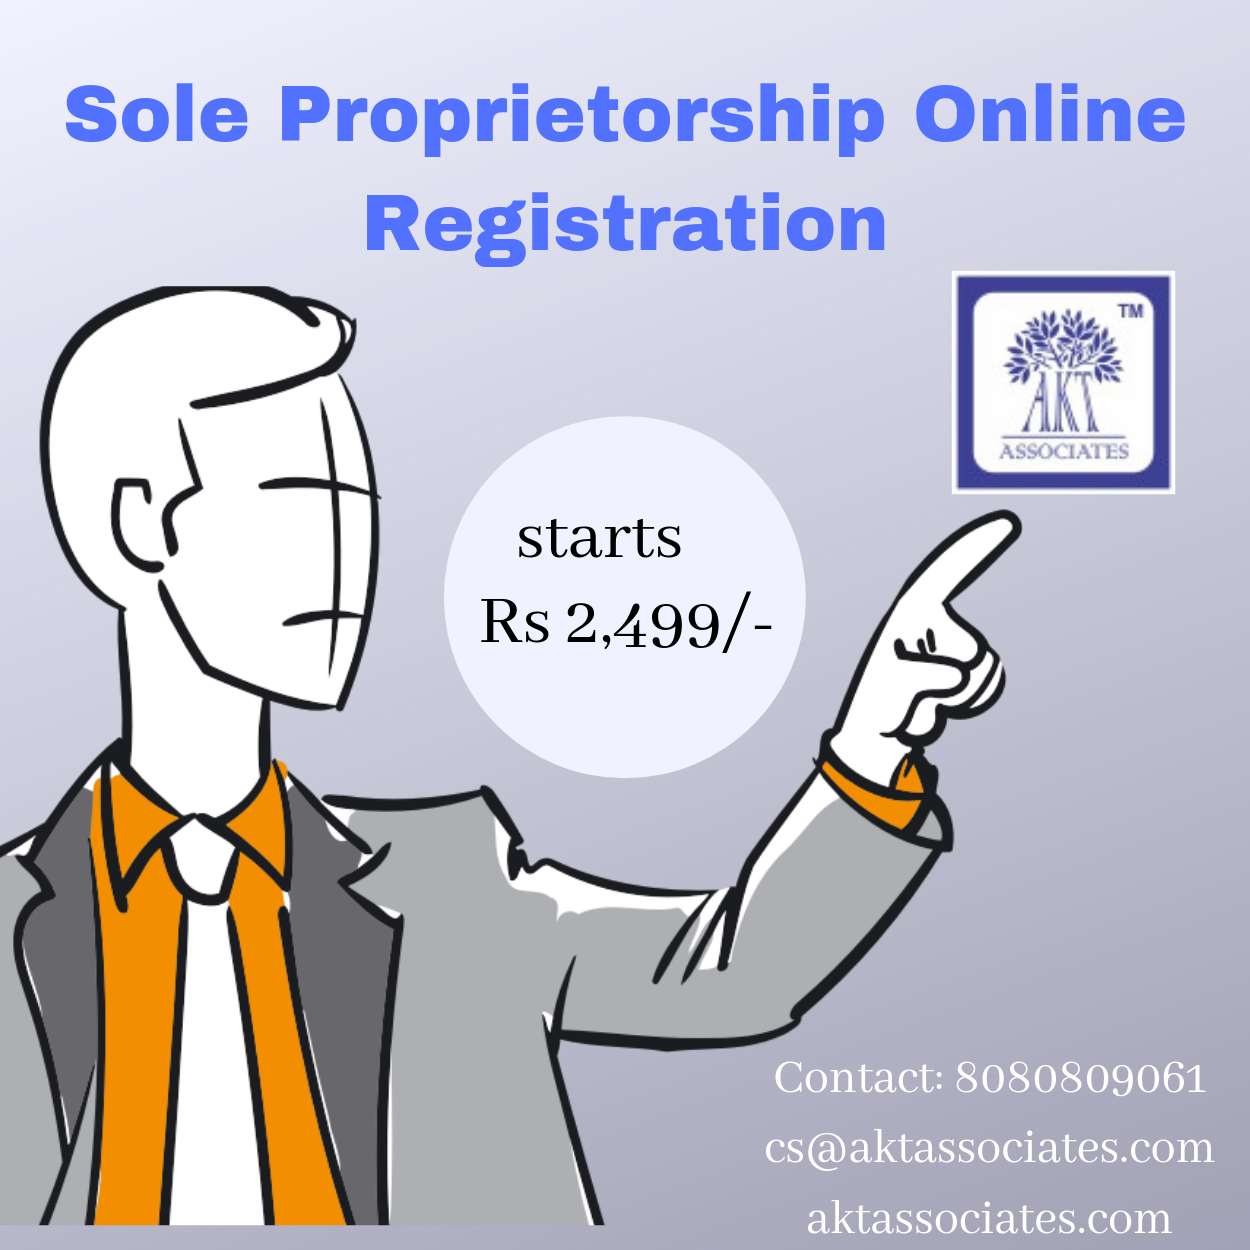 Can I Register Sole Proprietorship Online